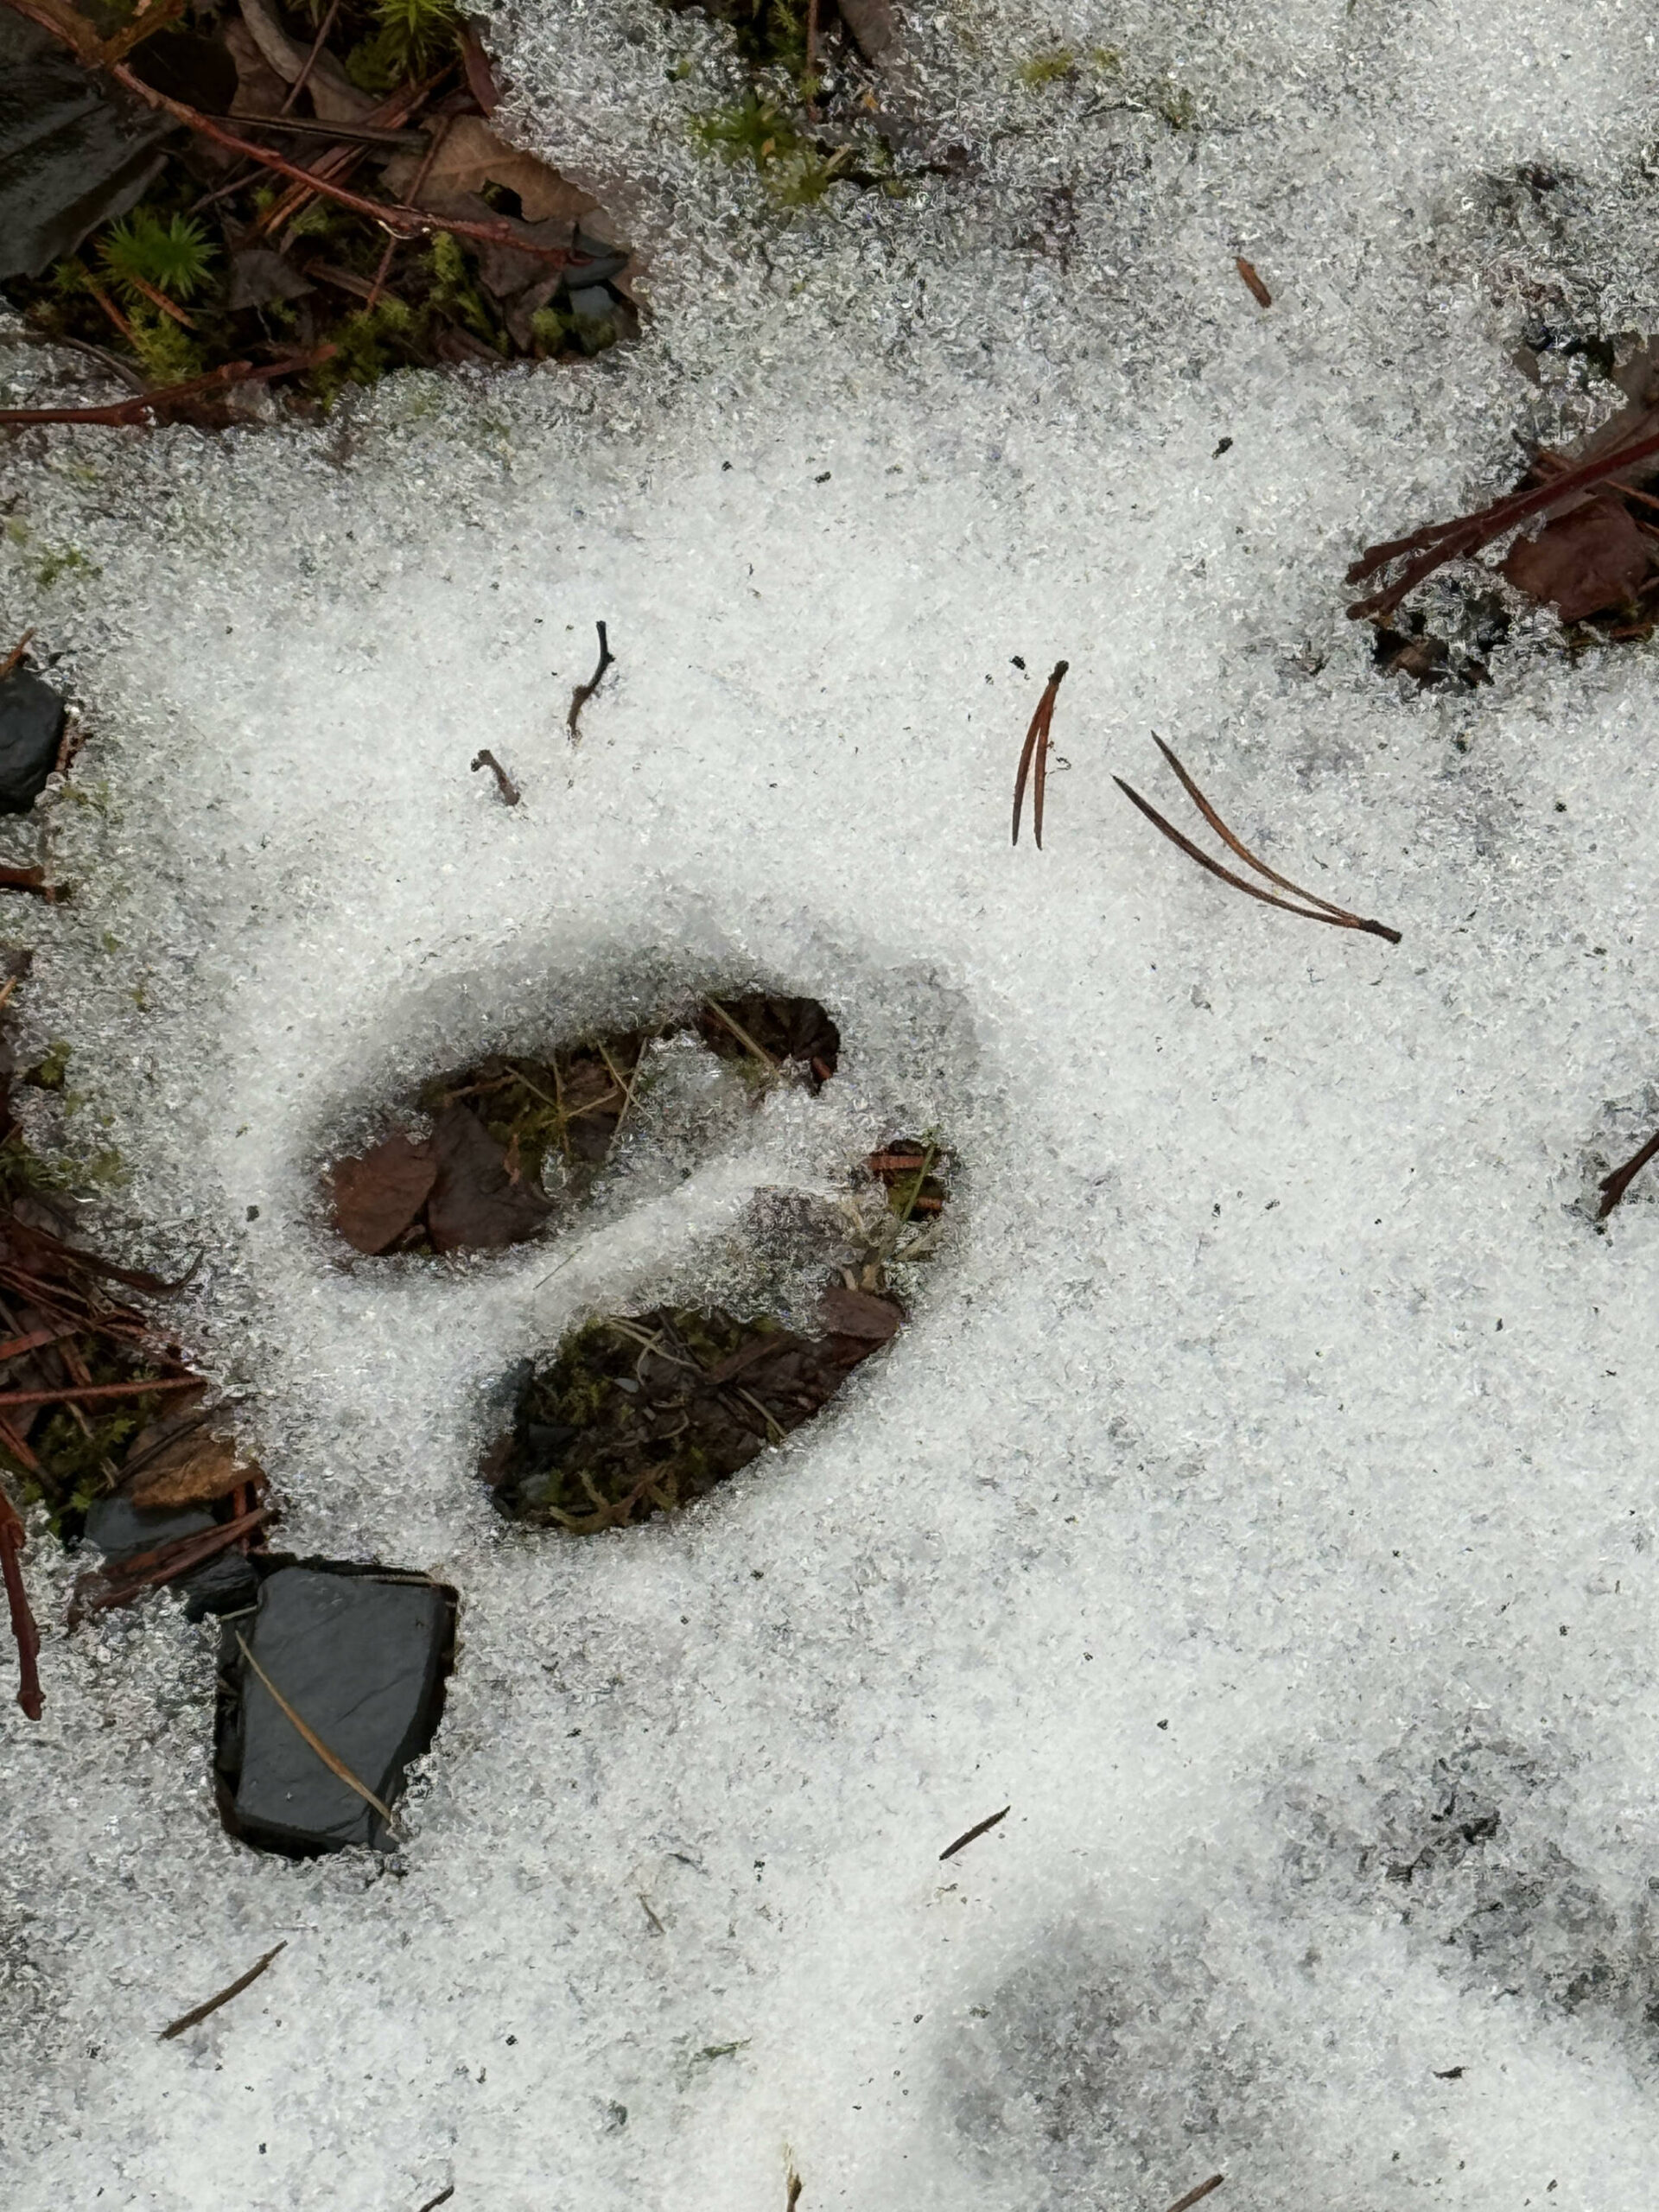 One of many deer tracks in Gastineau Meadows on Nov. 25. (Photo by Deana Barajas)